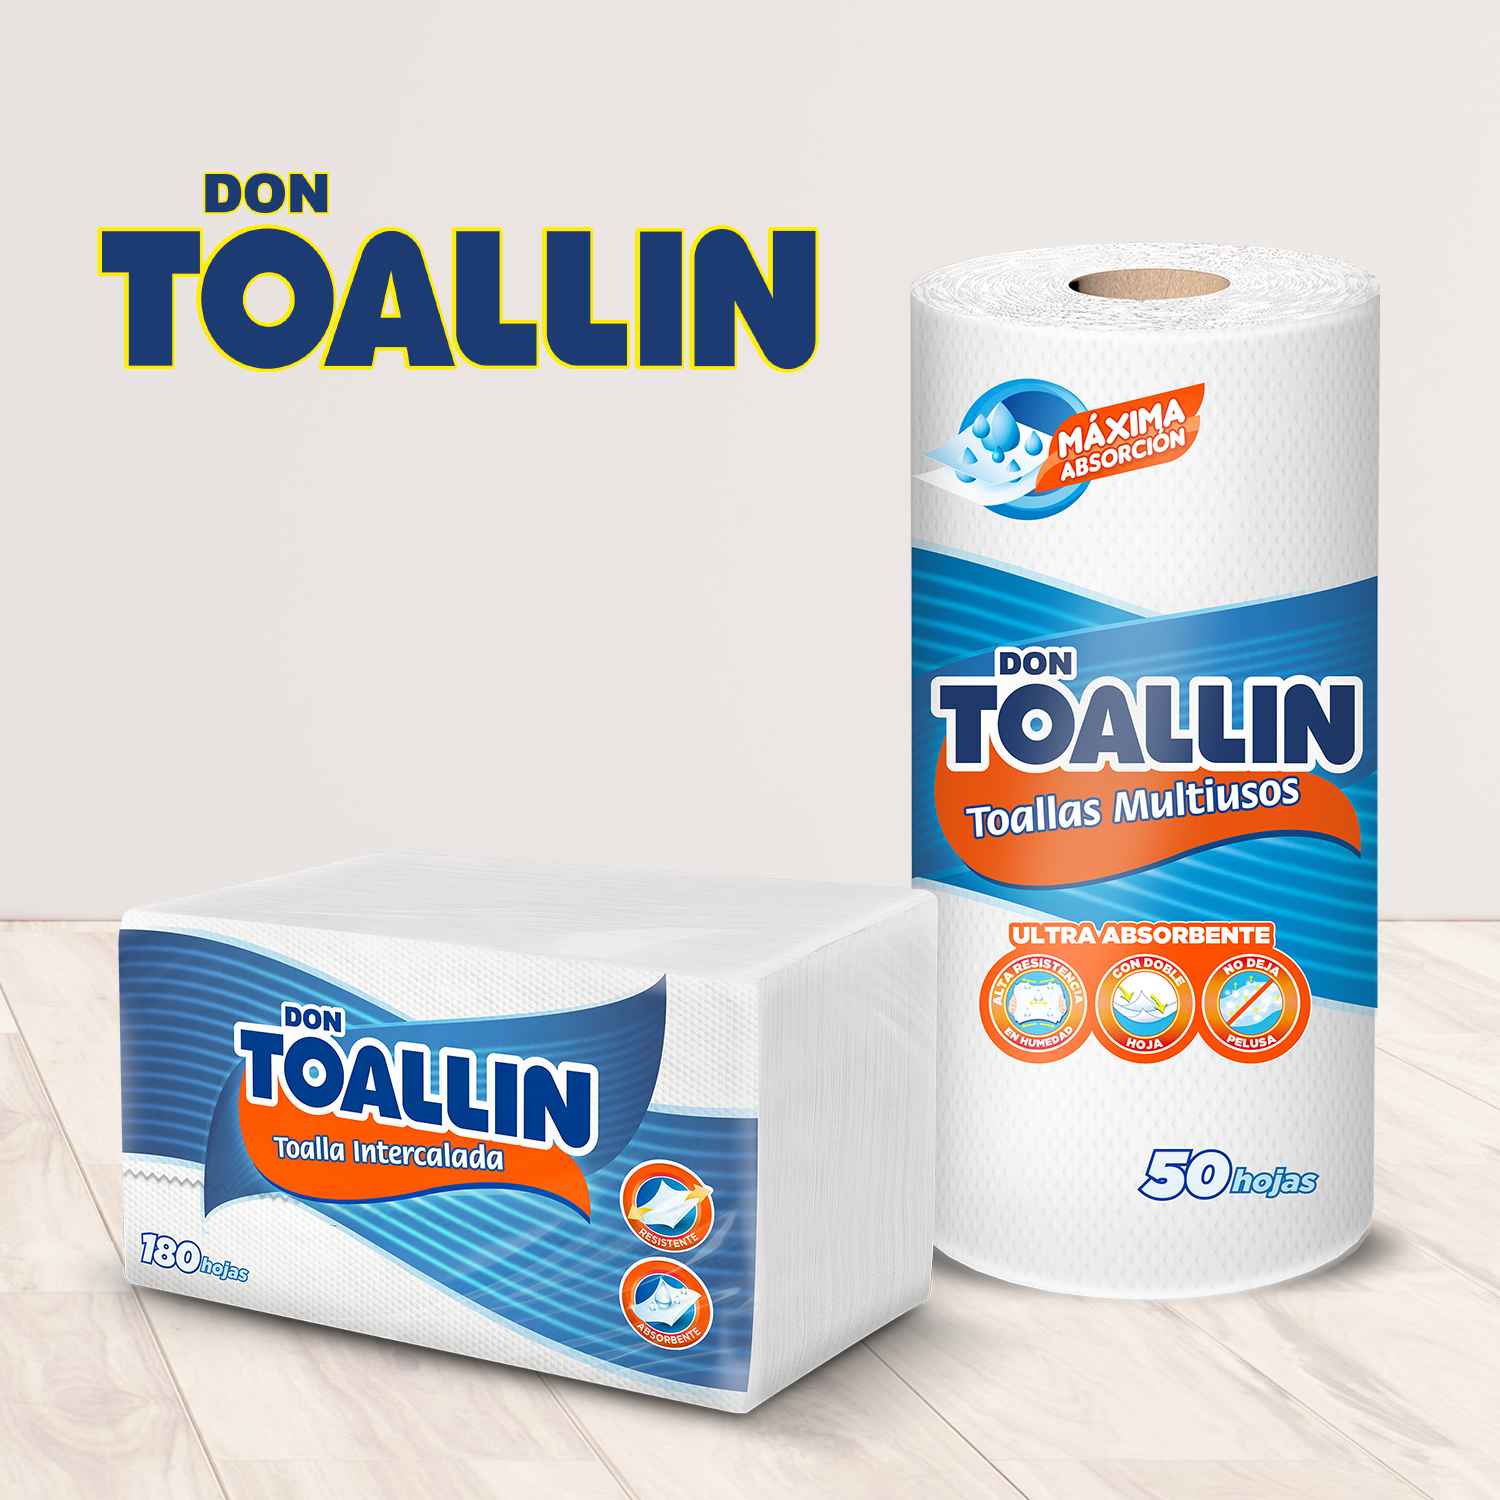 Don Toallin